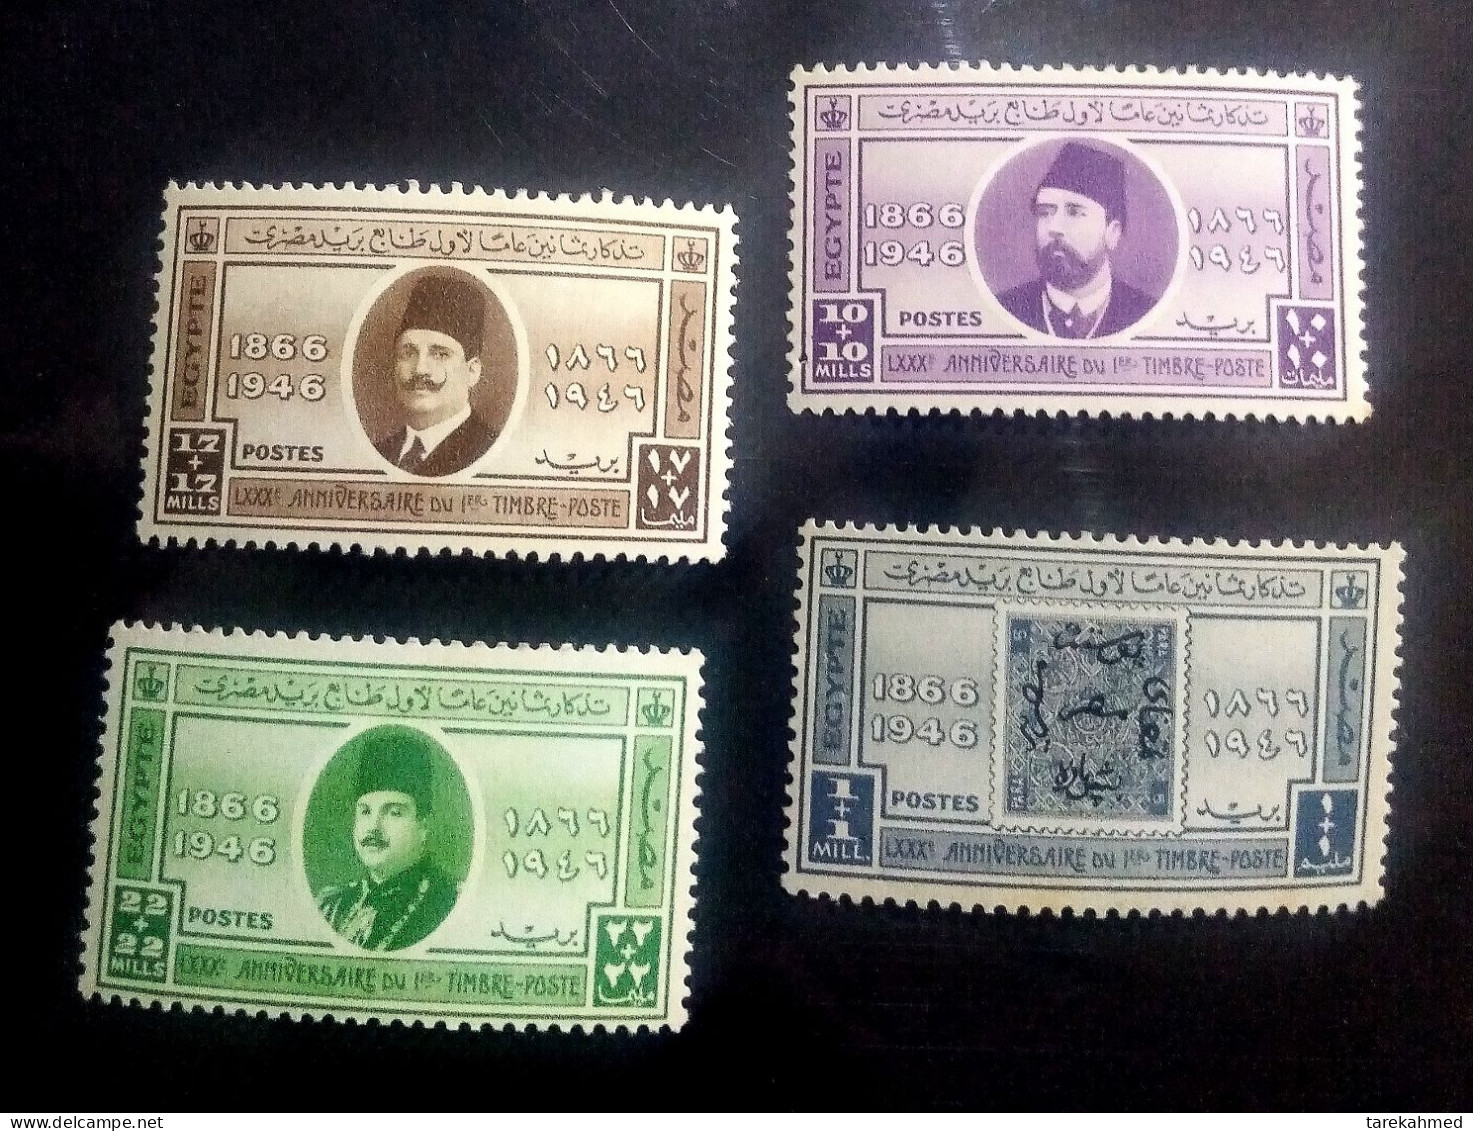 Egypt 1946 - Complete Set Of The 80th Anniv. Of Egypt’s 1st Postage Stamp - MNH, Original Gum. - Ongebruikt